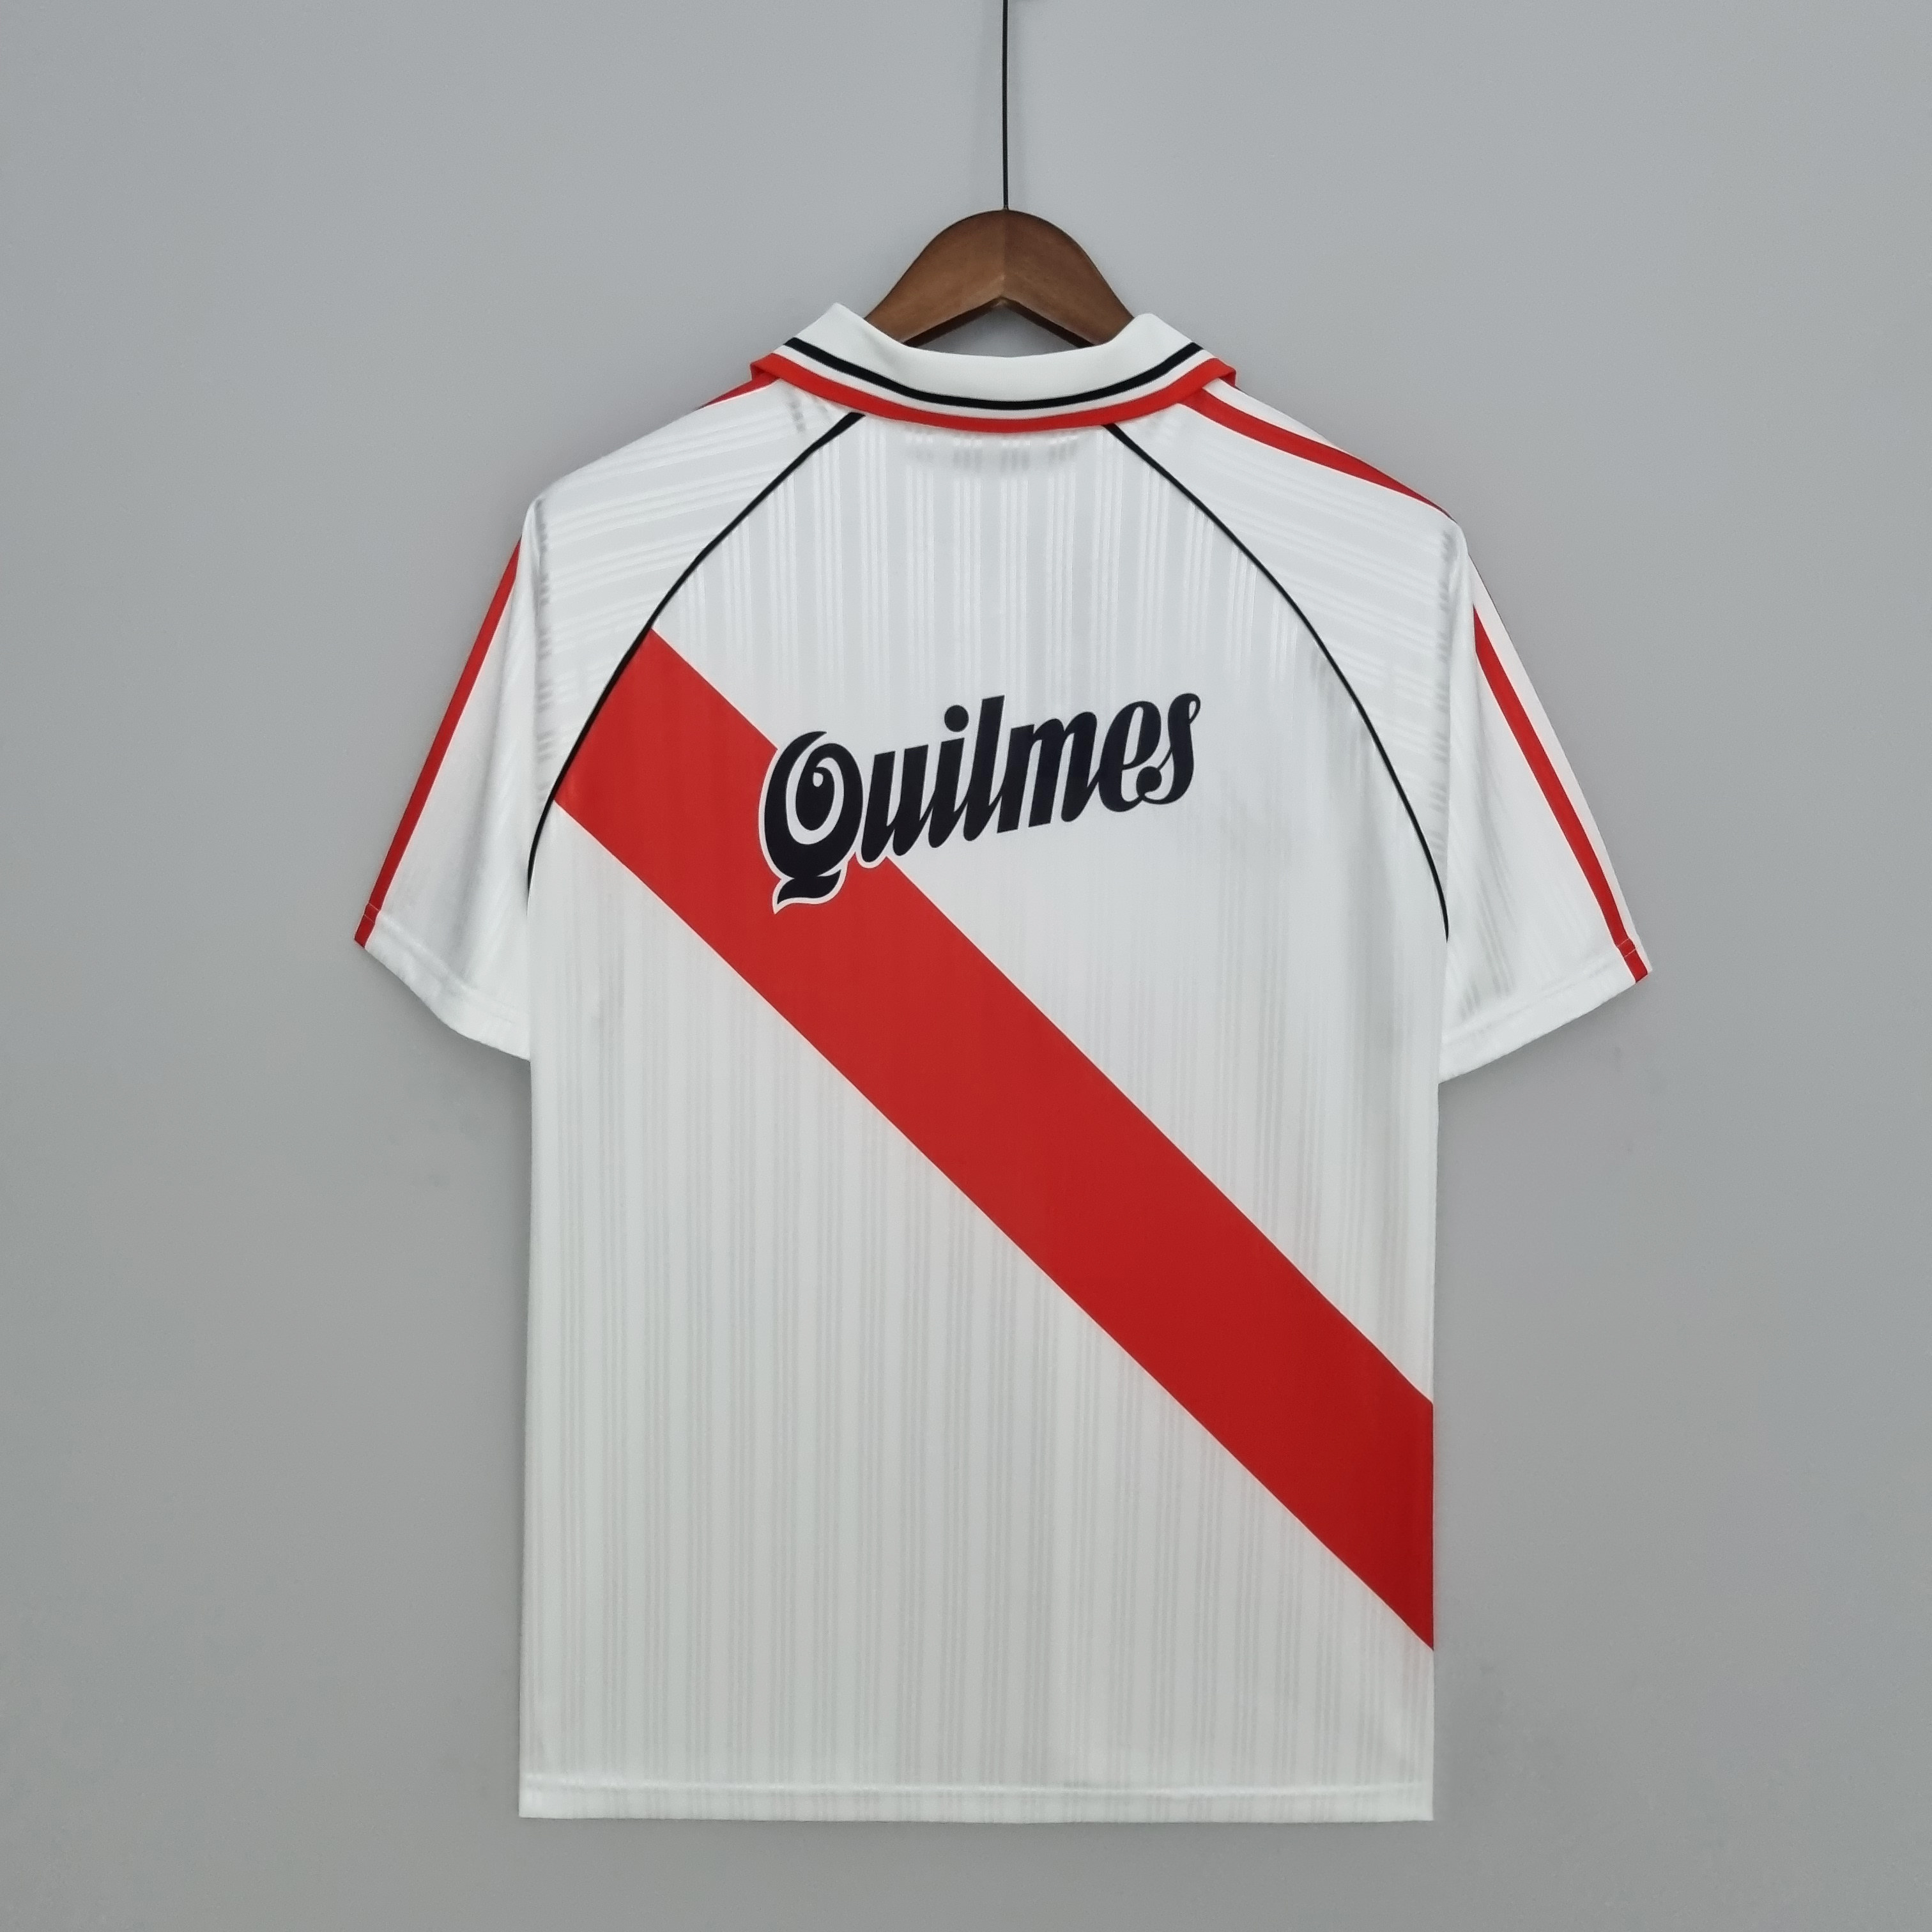 Retro River Plate 95/96 home